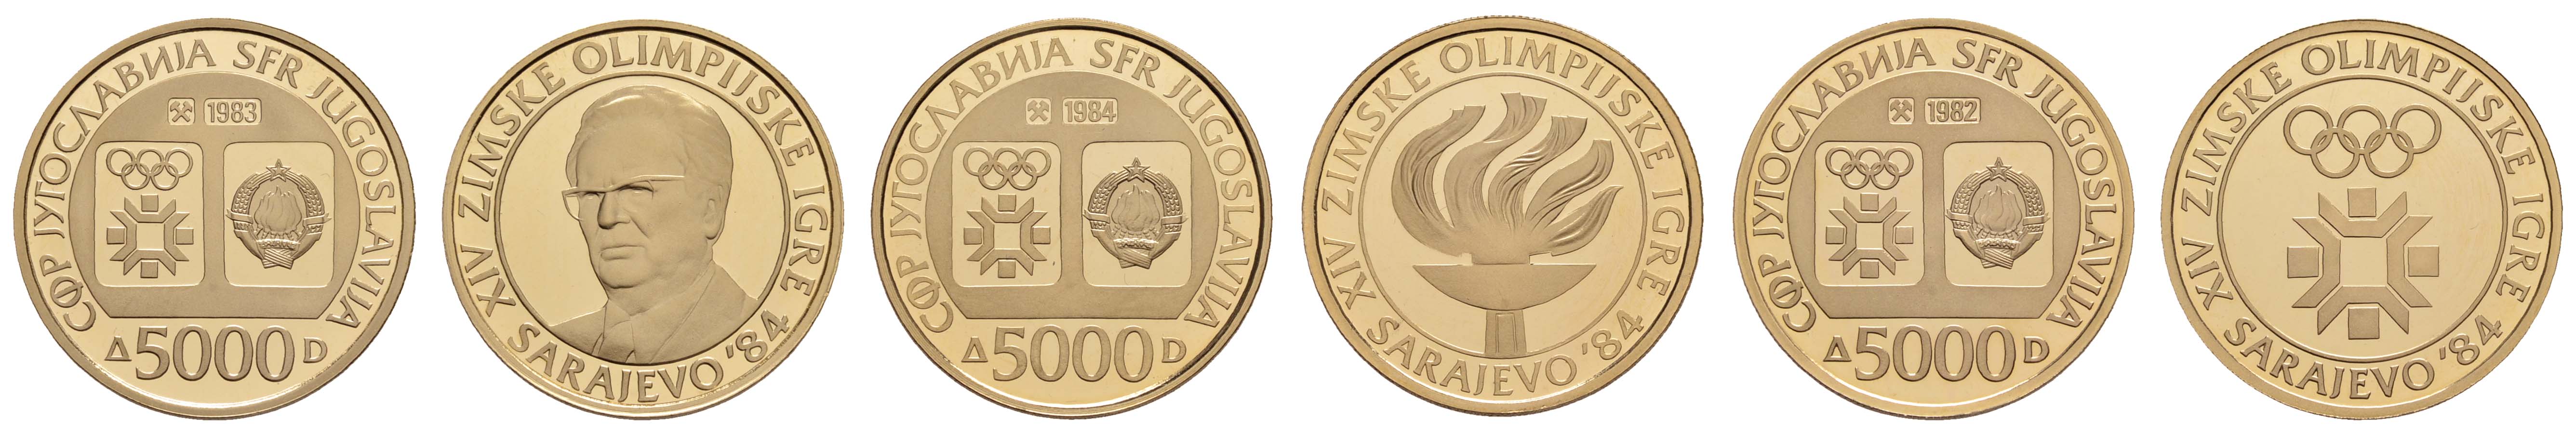 Lot 1679 - europa ab 1800 - Jugoslawien -  Auktionshaus Ulrich Felzmann GmbH & Co. KG Coins single lots